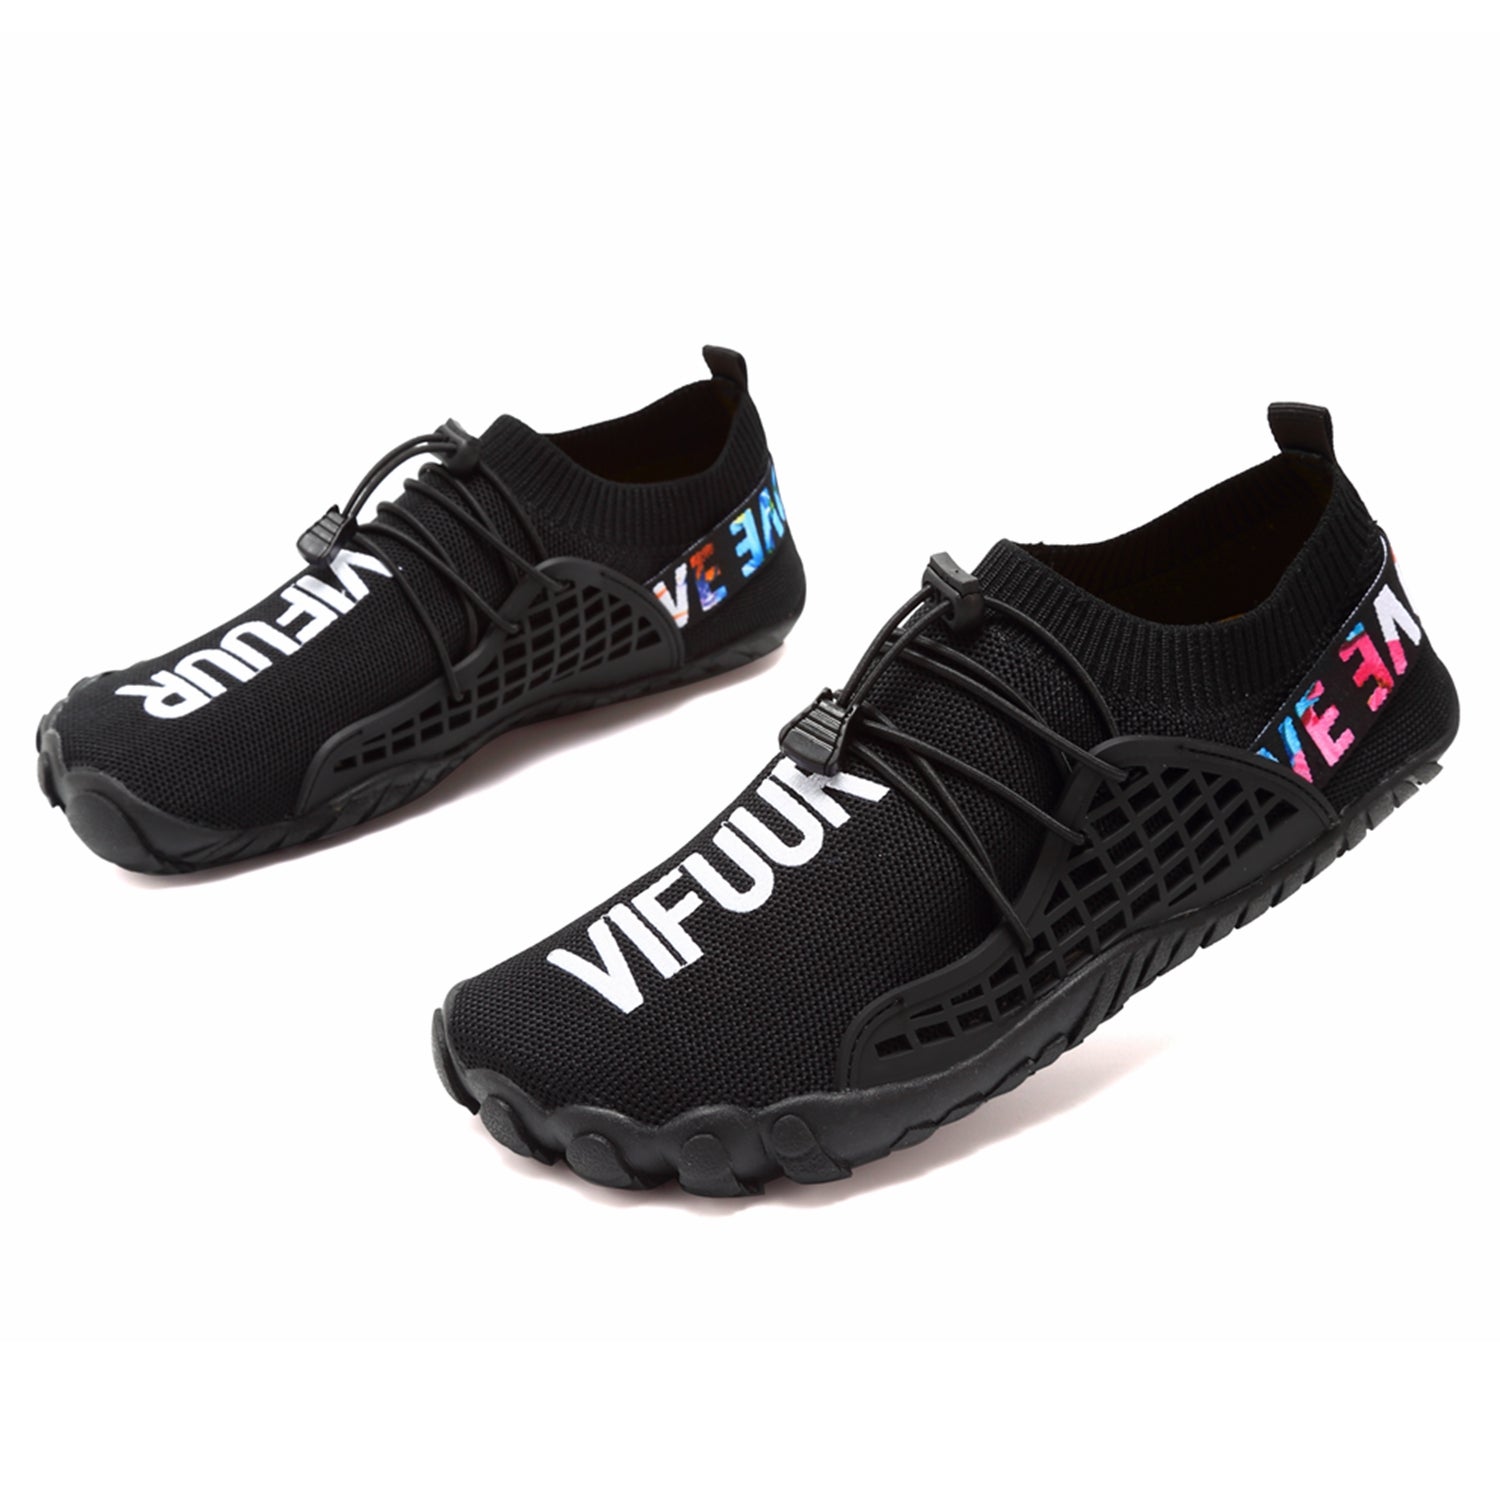 VIFUUR Knit Athletic Water Shoes for Women Vifuur